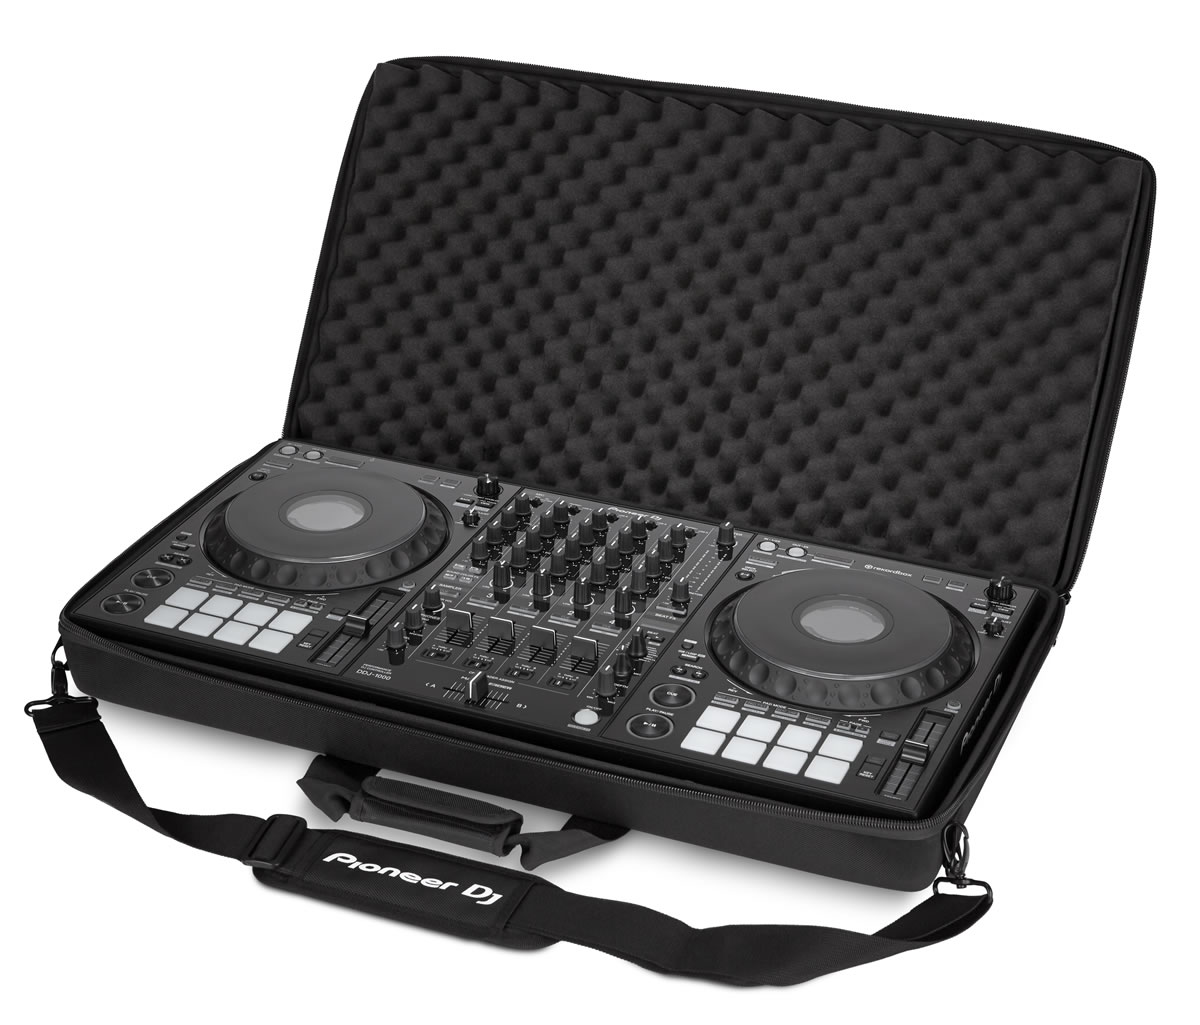 Pioneer DJ DJC-1X Bag